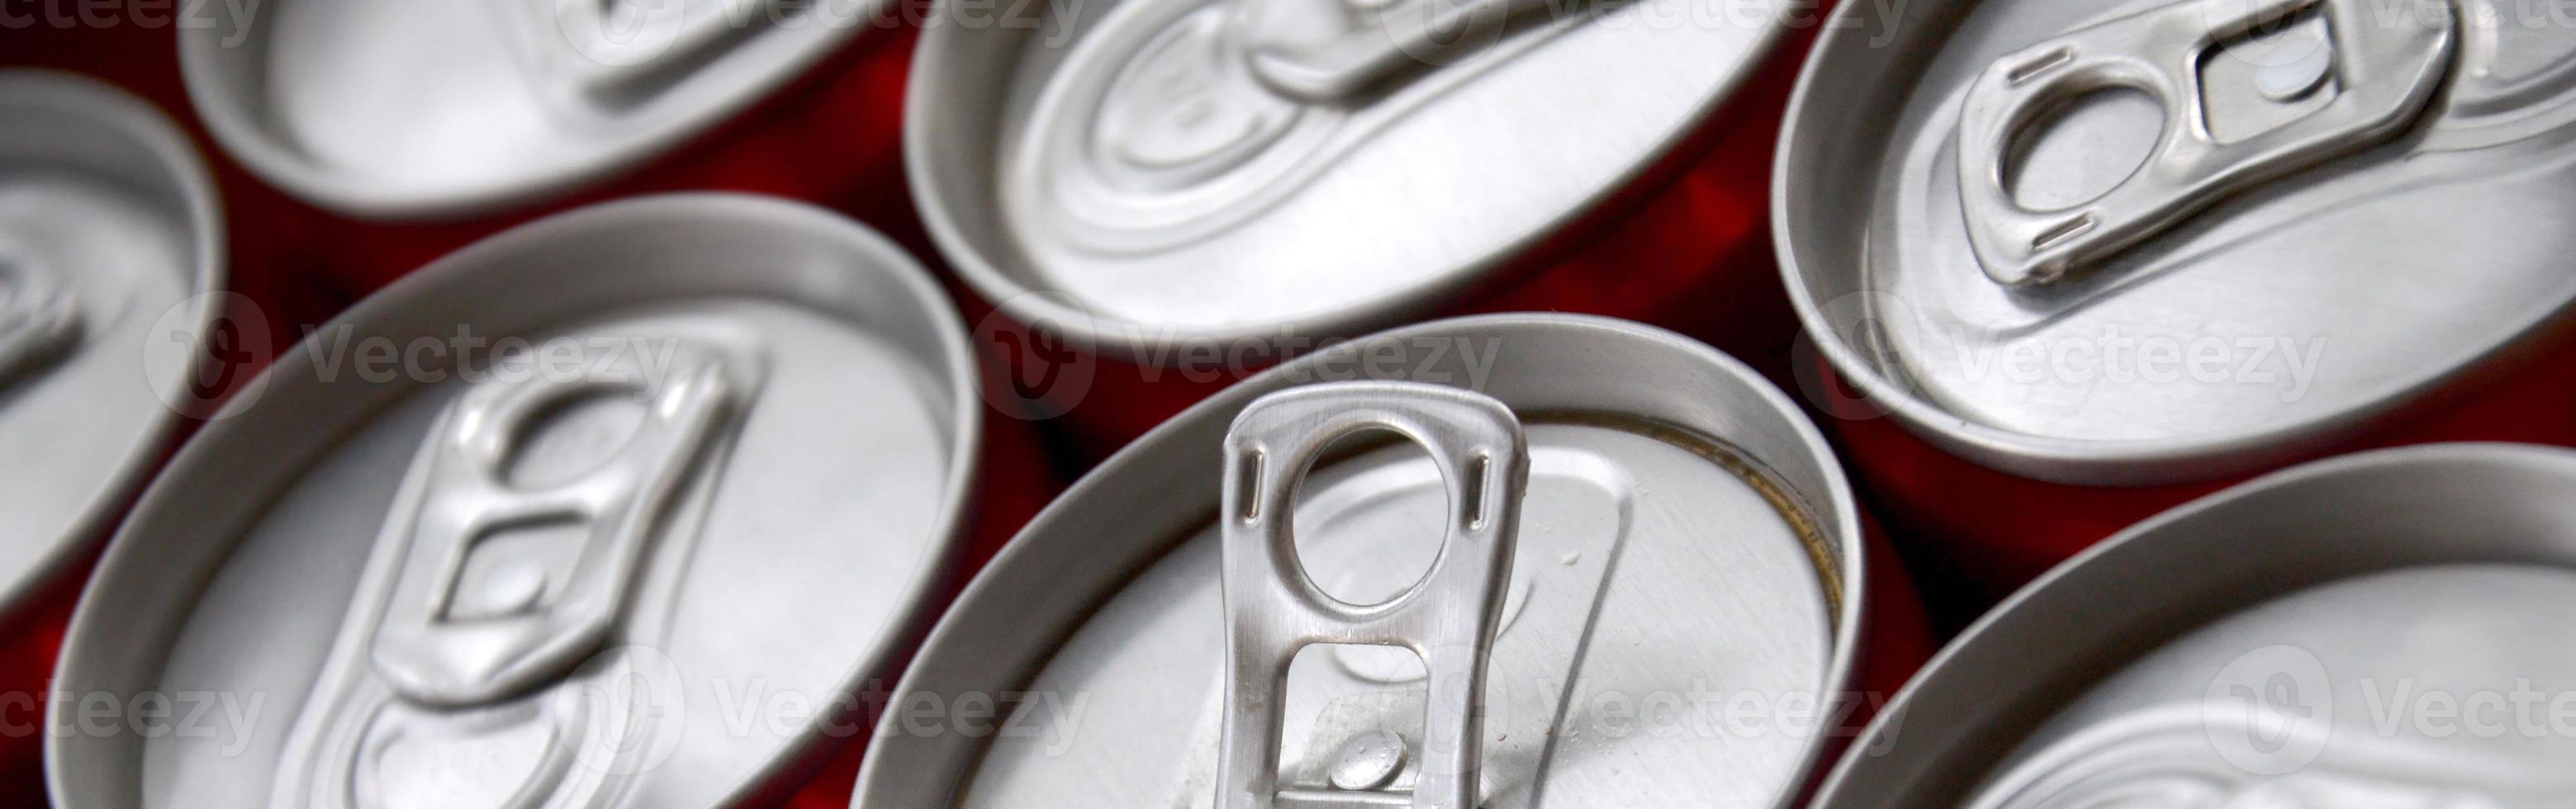 veel aluminium Frisdrank drinken blikjes. reclame voor Frisdrank drankjes of blik blikjes massa fabricage foto